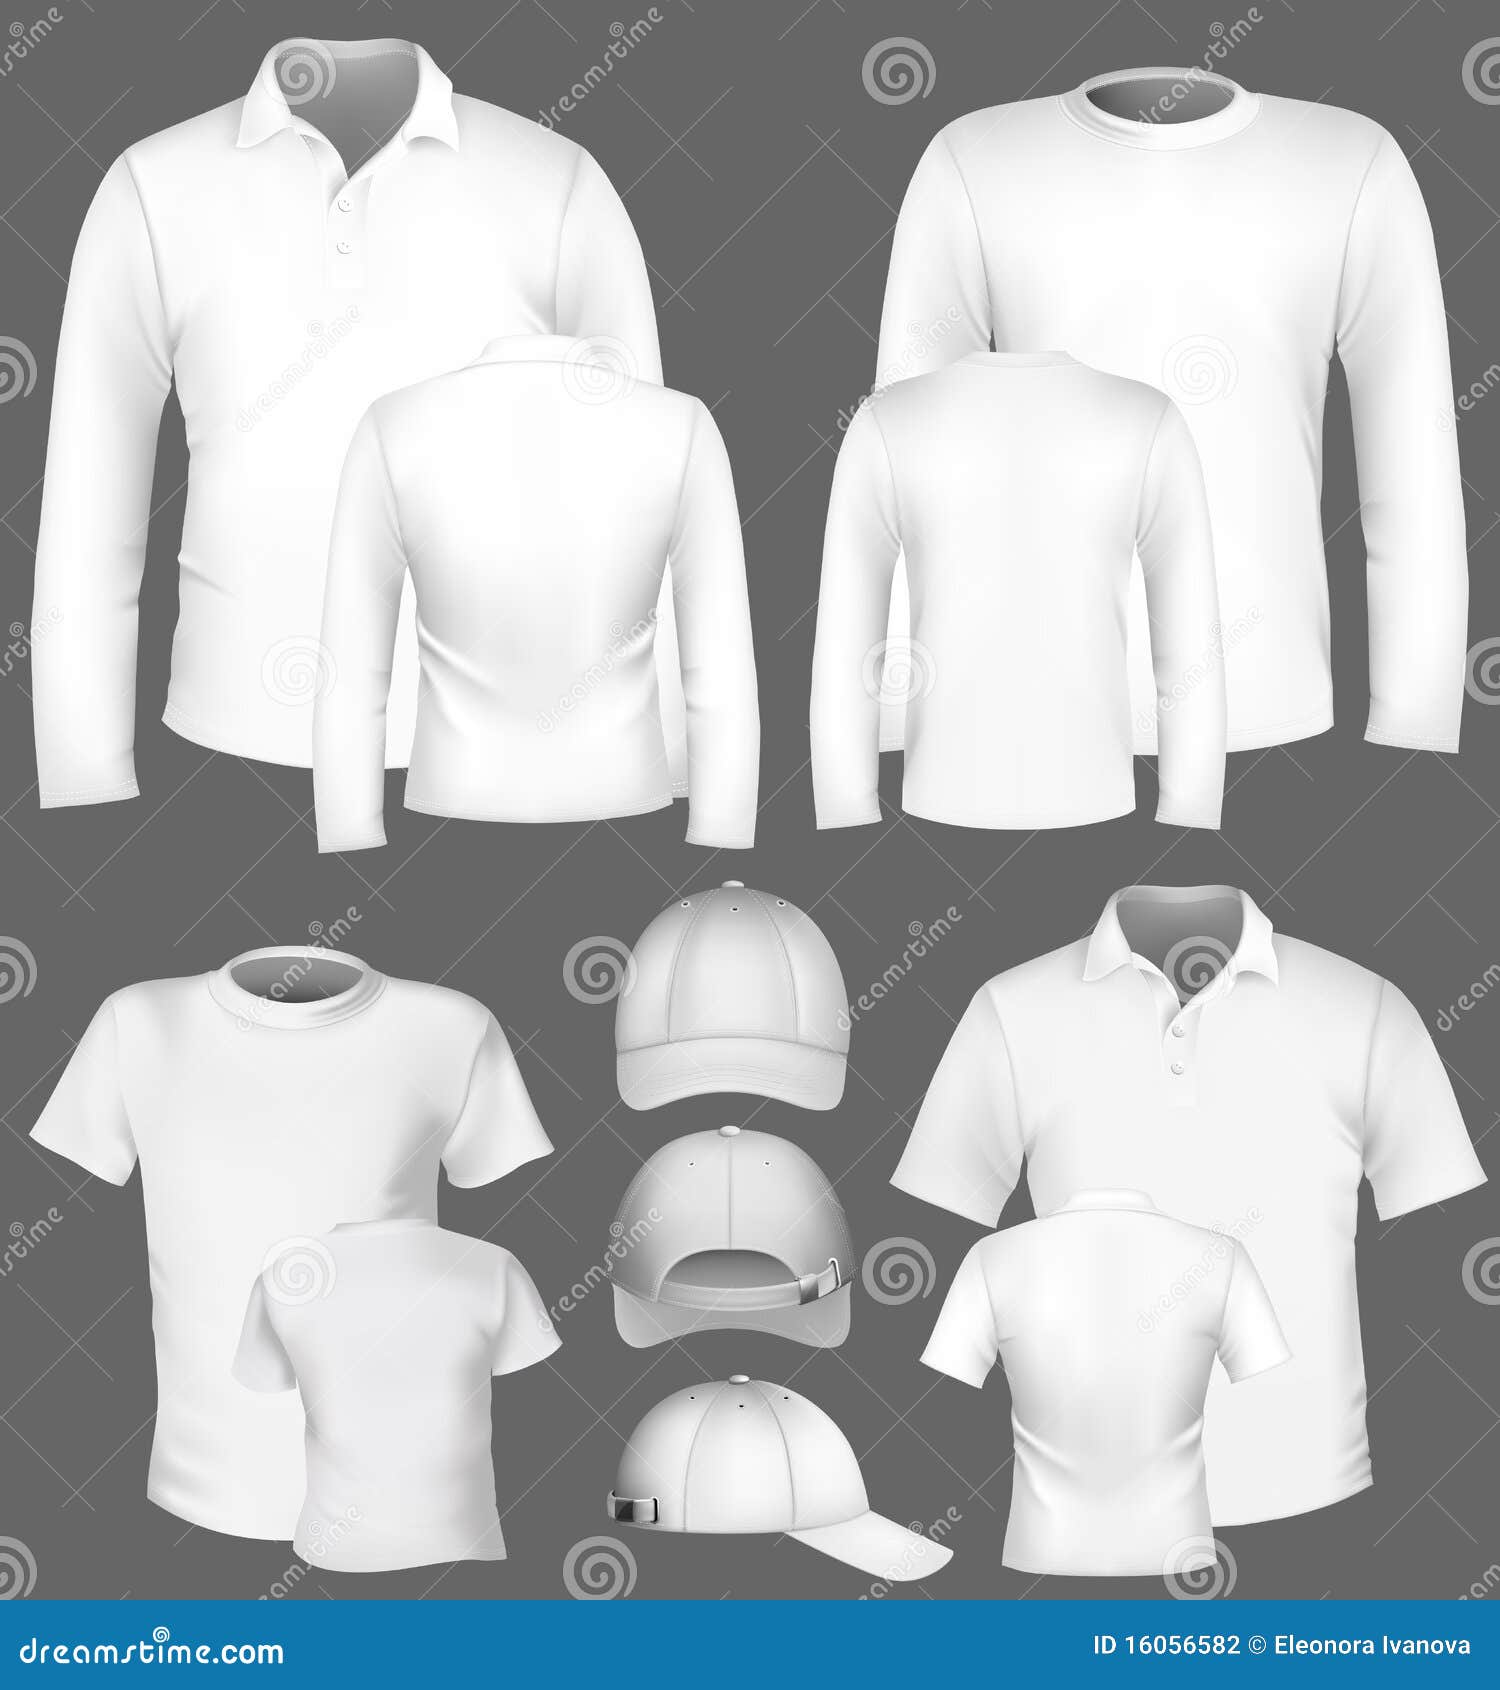 polo shirt and t-shirt  template